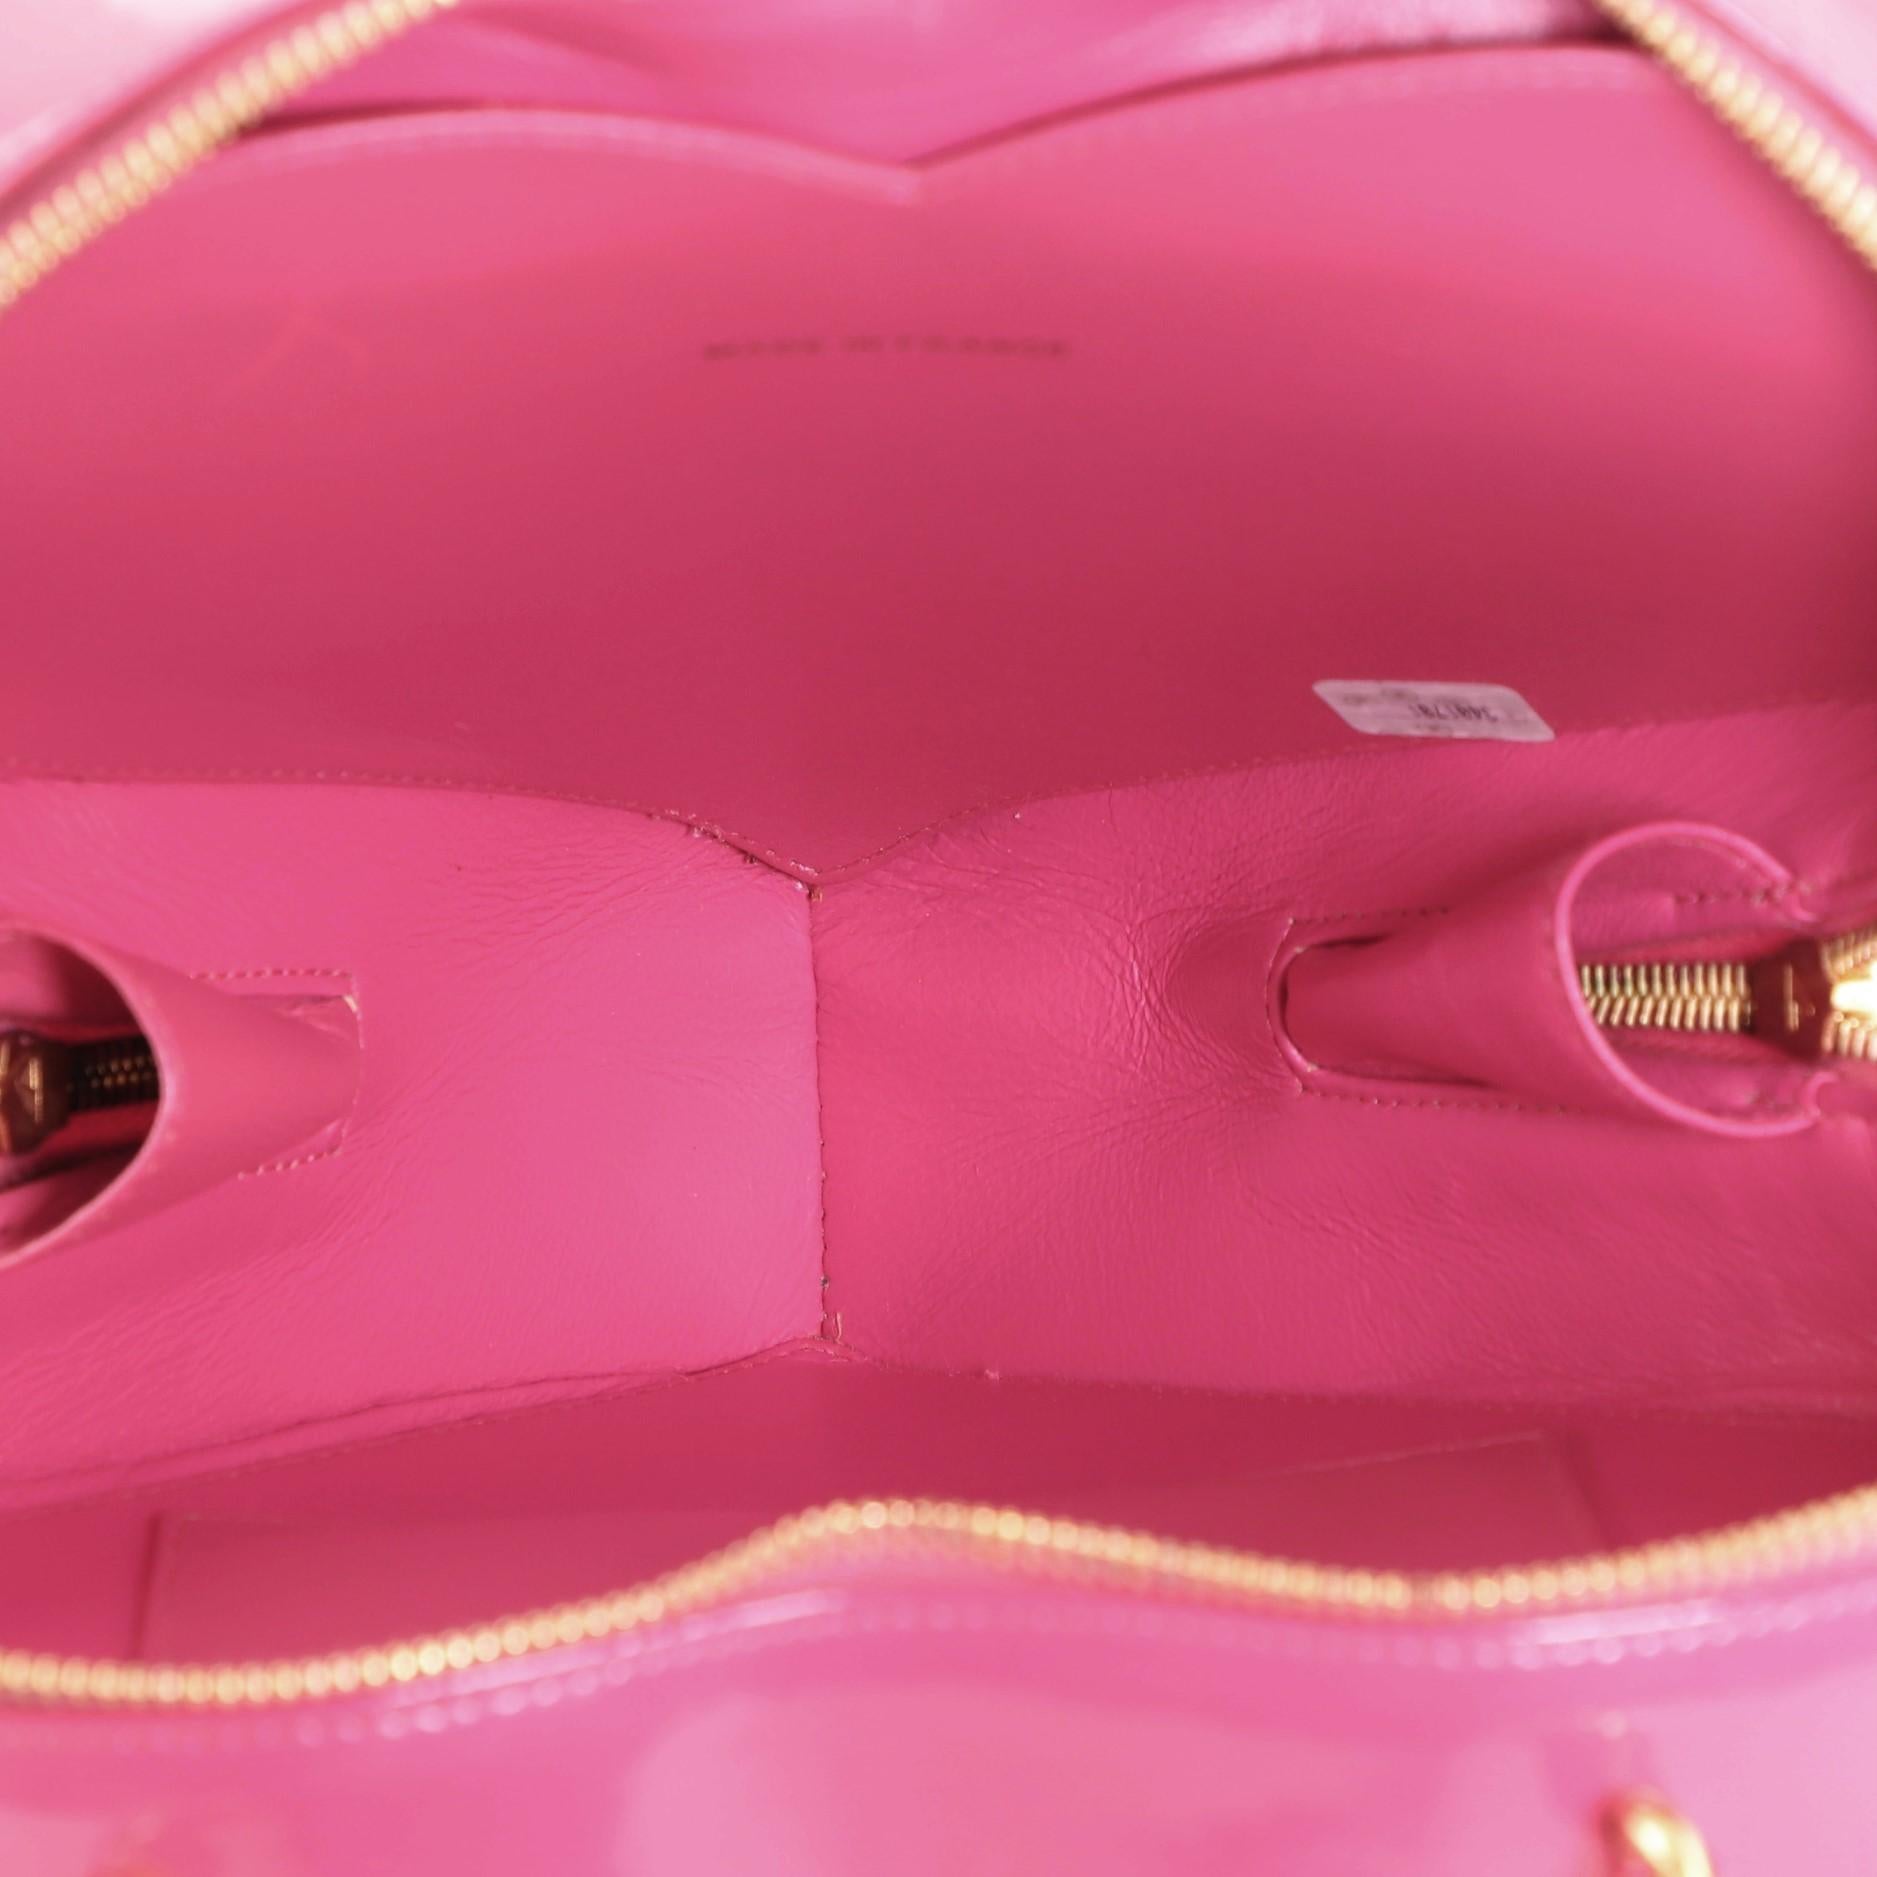 pink heart chanel bag